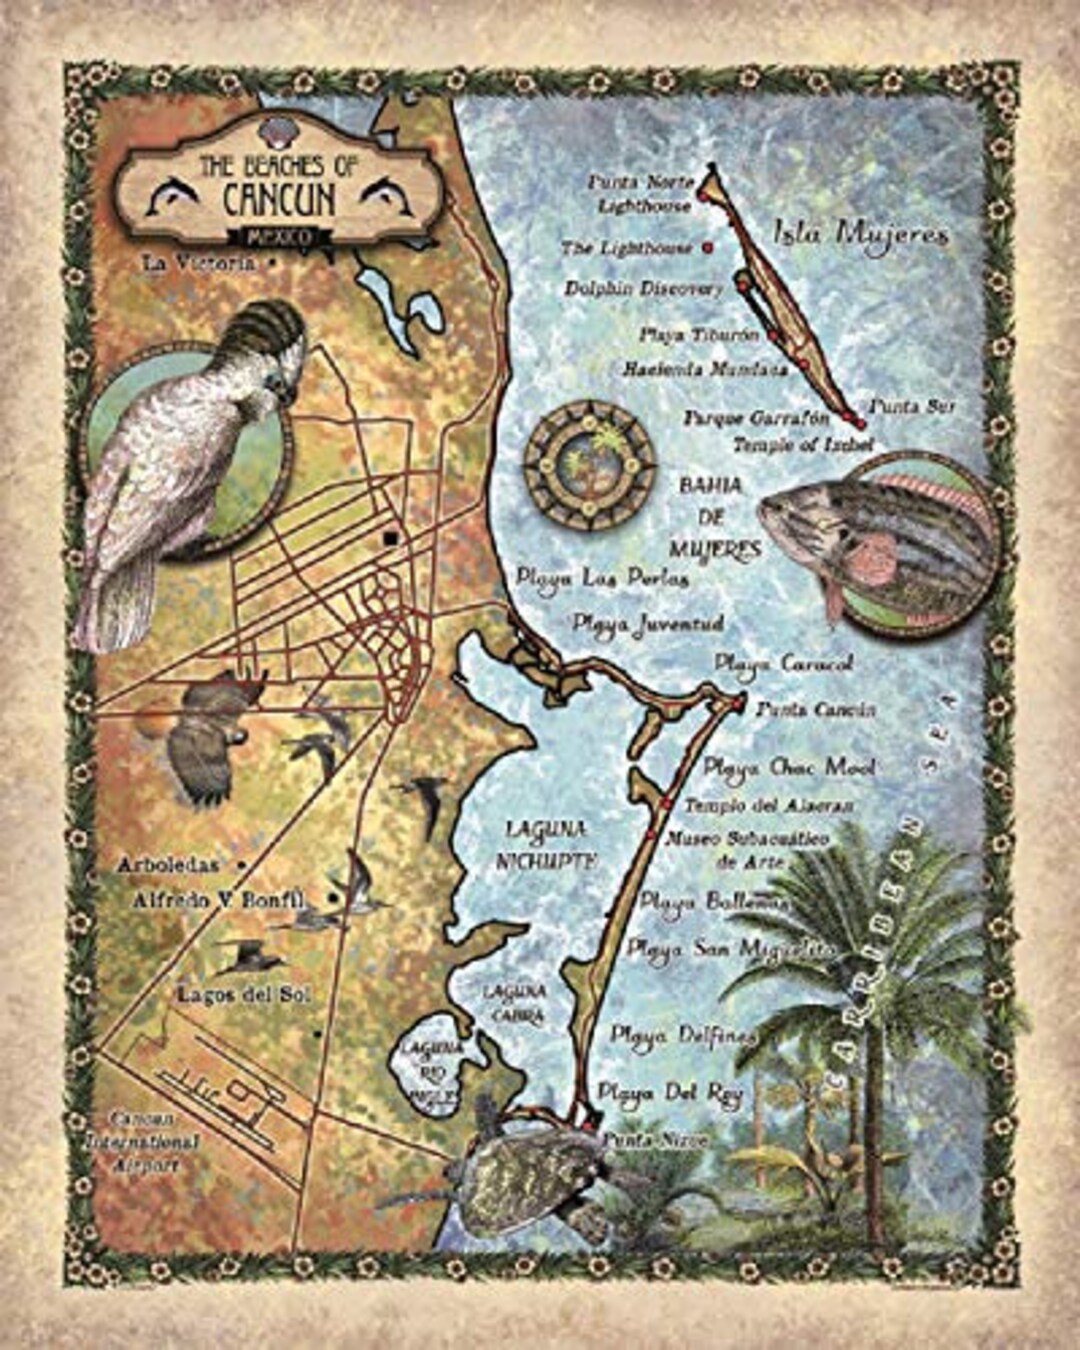 Cancun Mexico Historic Map Art Print Poster Souvenir Artwork - Etsy Denmark